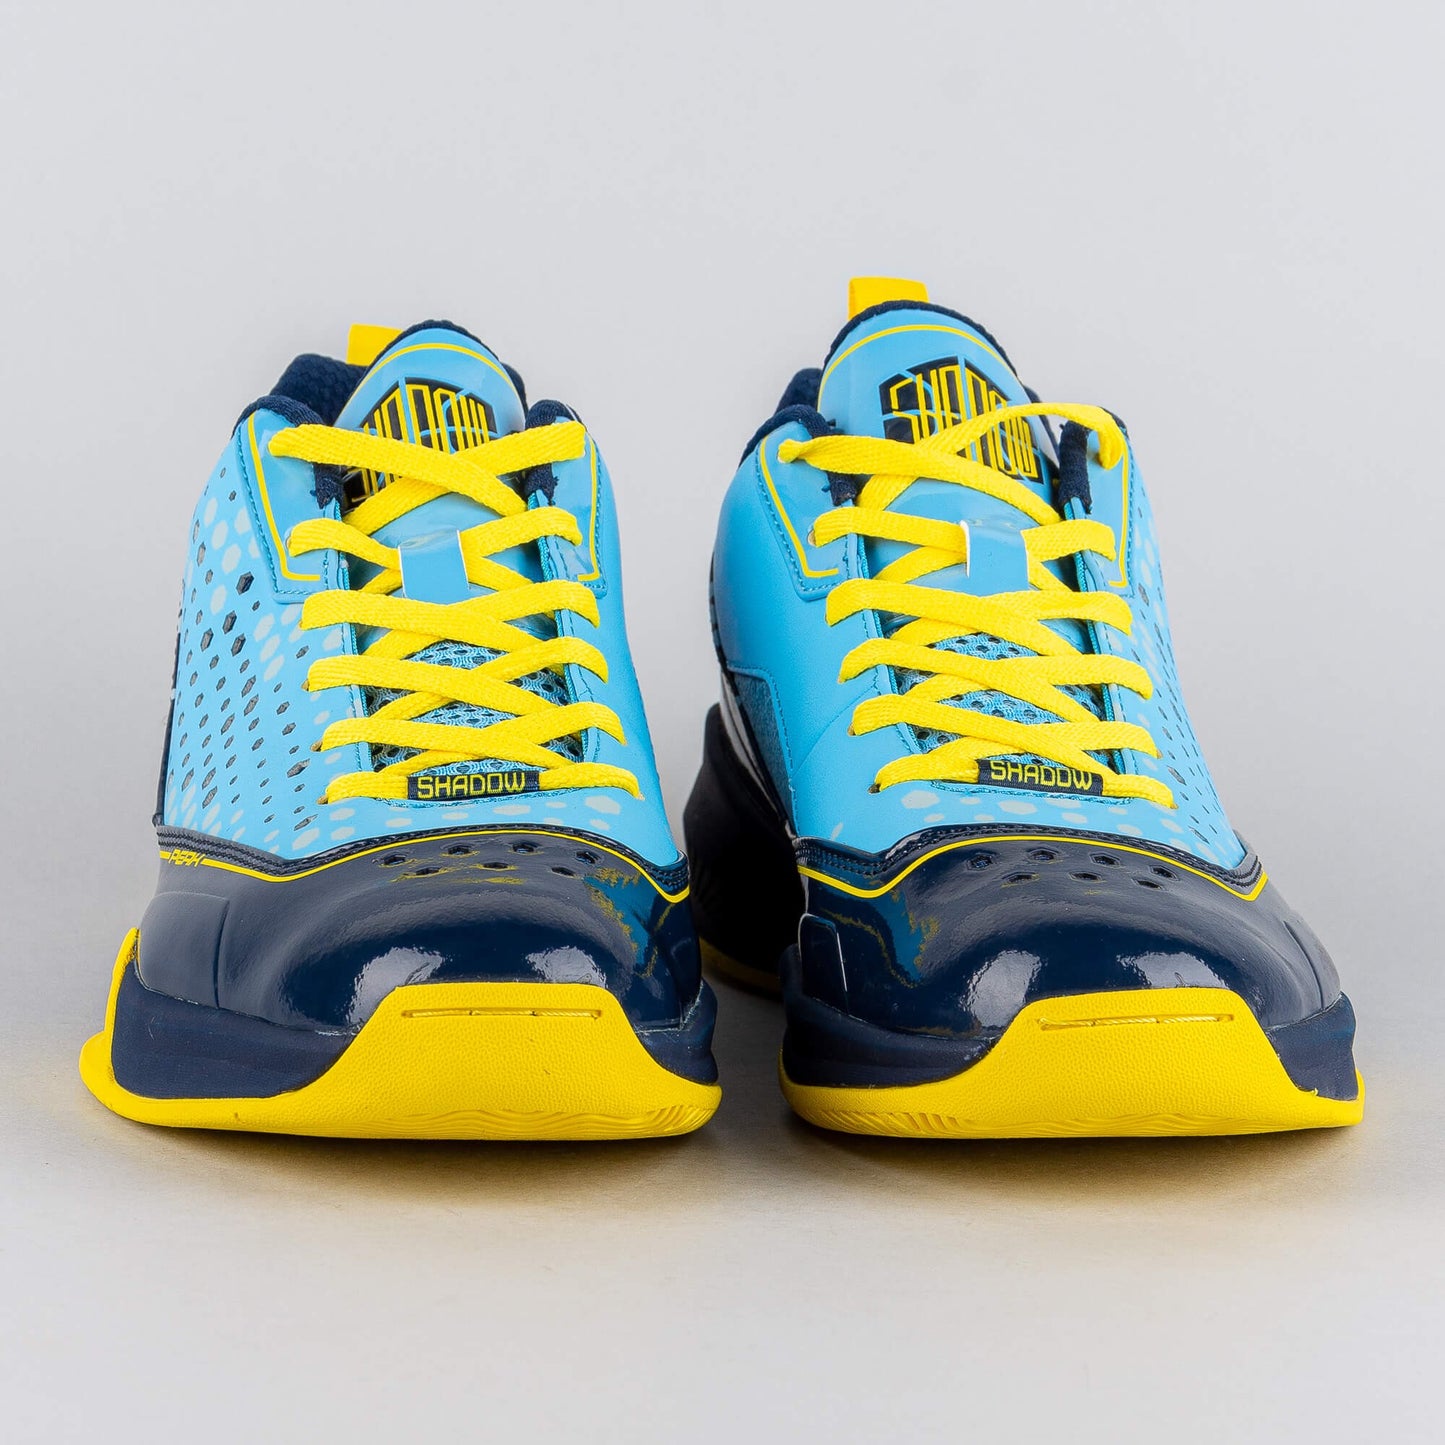 Peak Basketball Shoes Shadow Blue/Elegant Blue